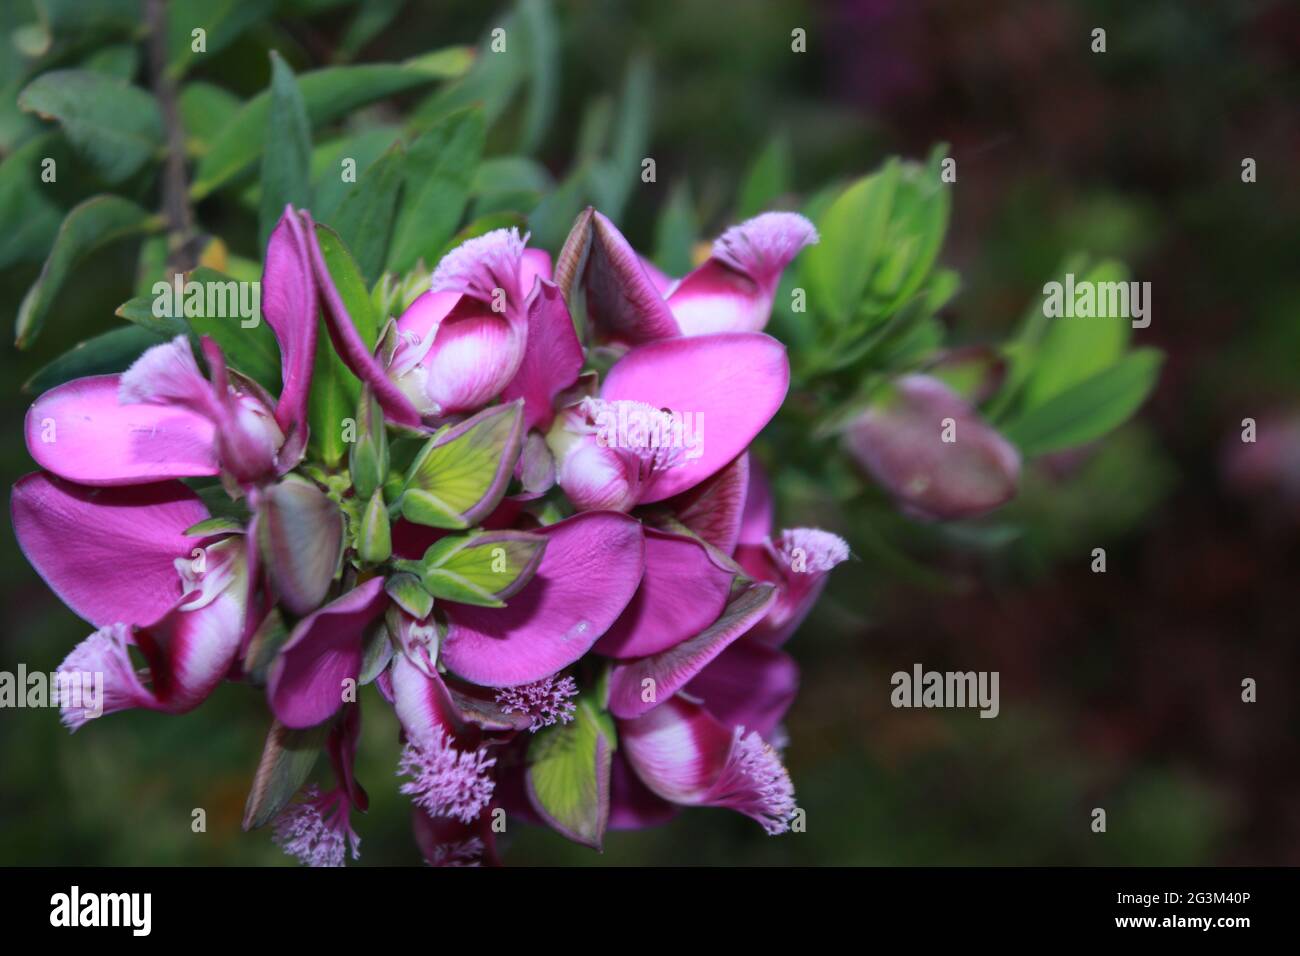 Wild medicinal plants purple flowers Stock Photo